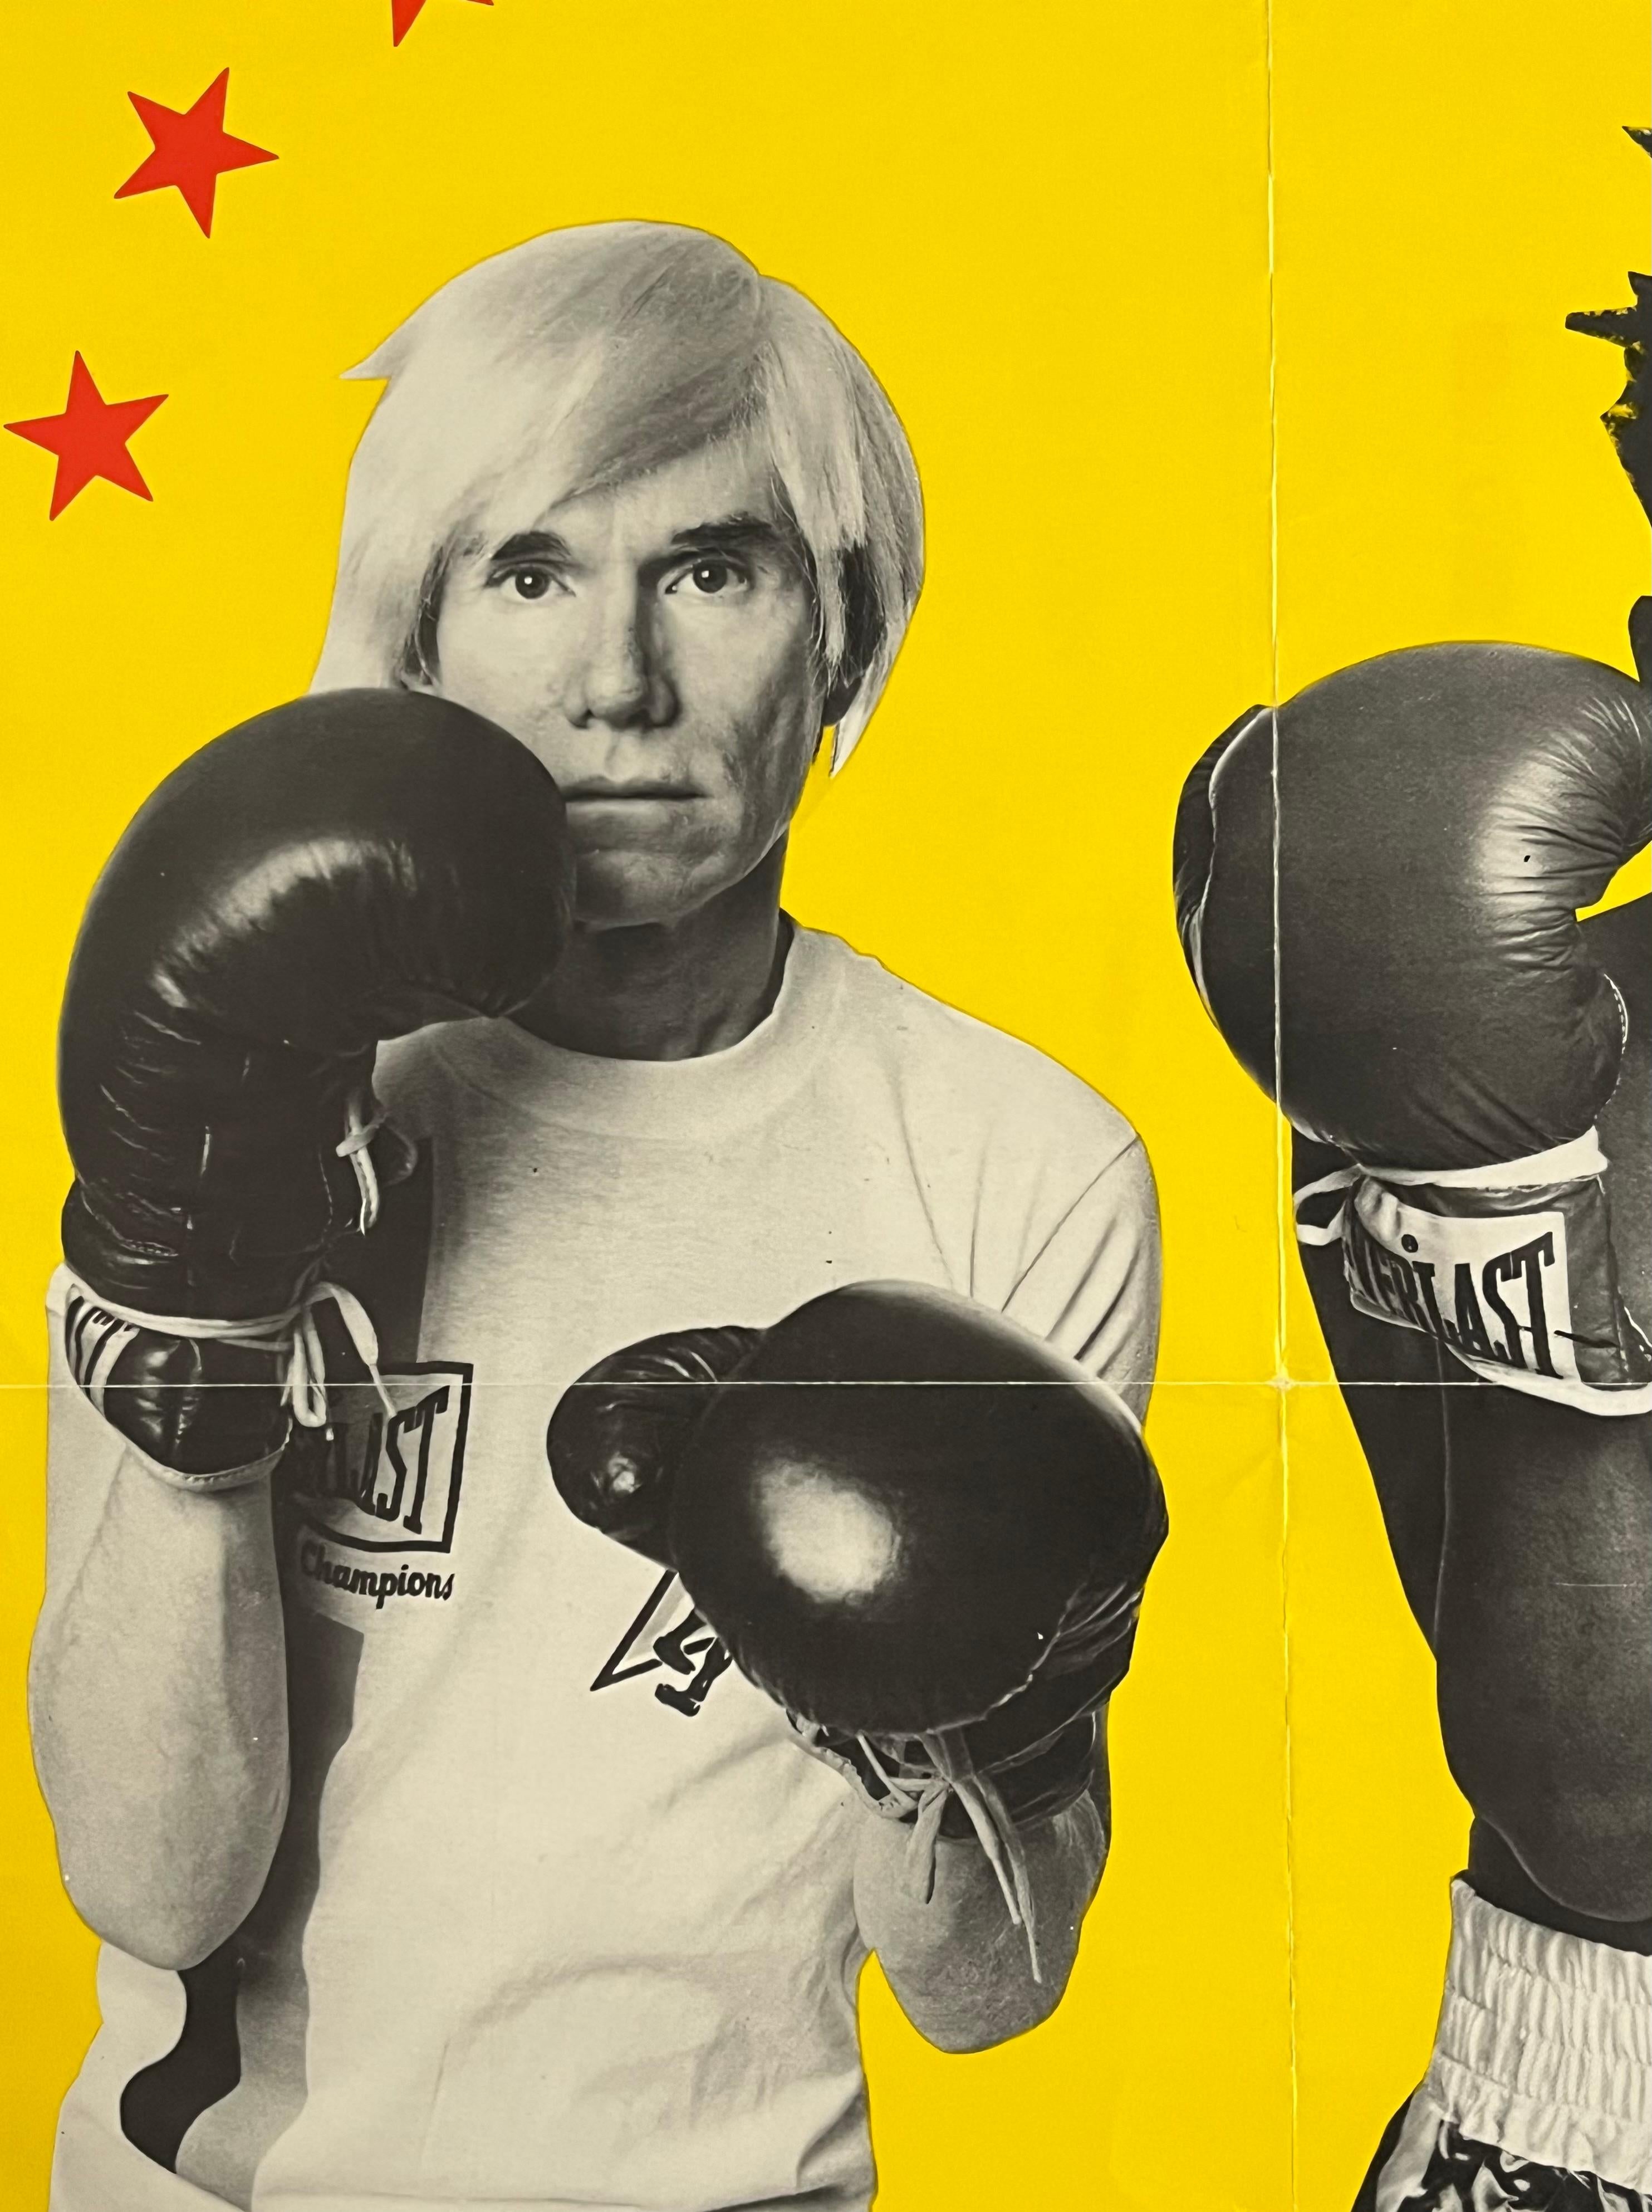 Warhol Basquiat Boxing Poster 1985 (Warhol Basquiat boxing 1985) - Print by Michael Halsband